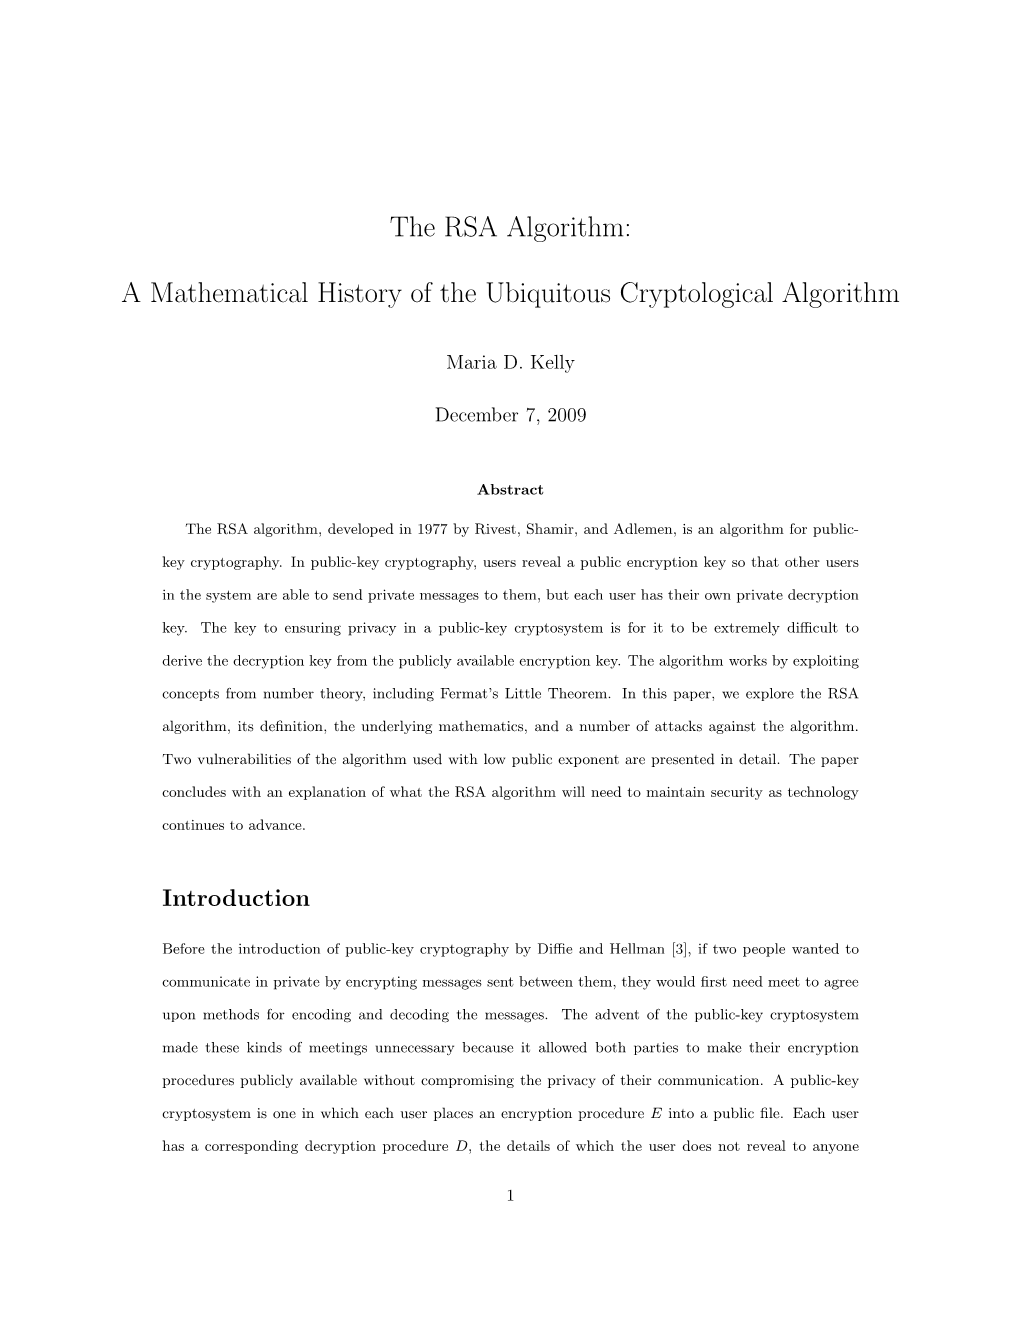 The RSA Algorithm: a Mathematical History of the Ubiquitous